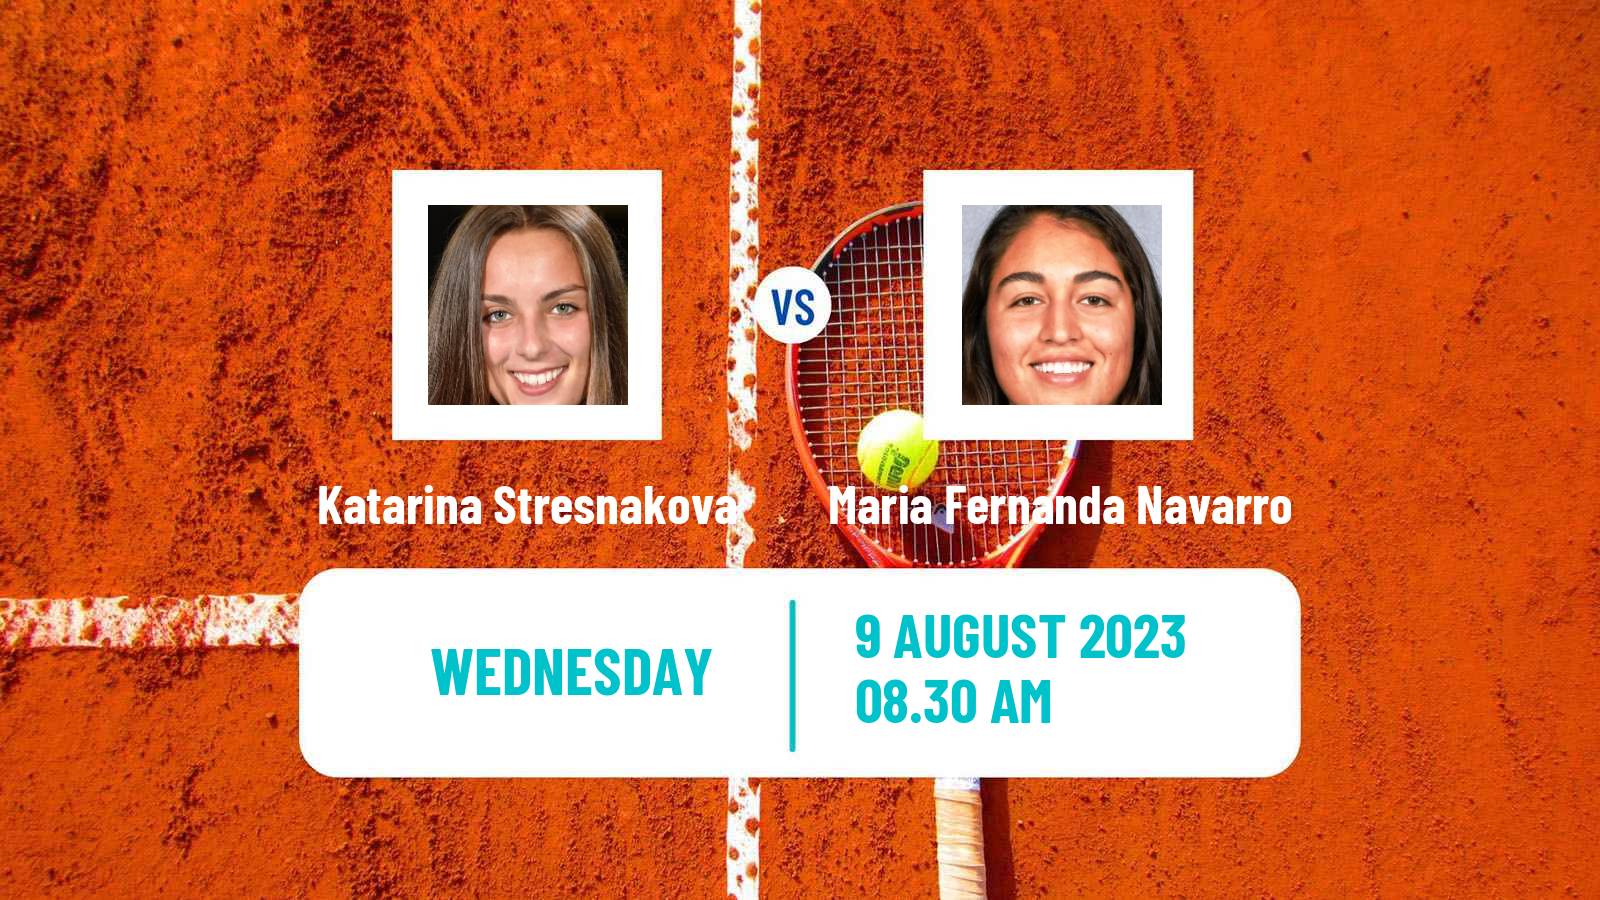 Tennis ITF W25 Roehampton 3 Women Katarina Stresnakova - Maria Fernanda Navarro